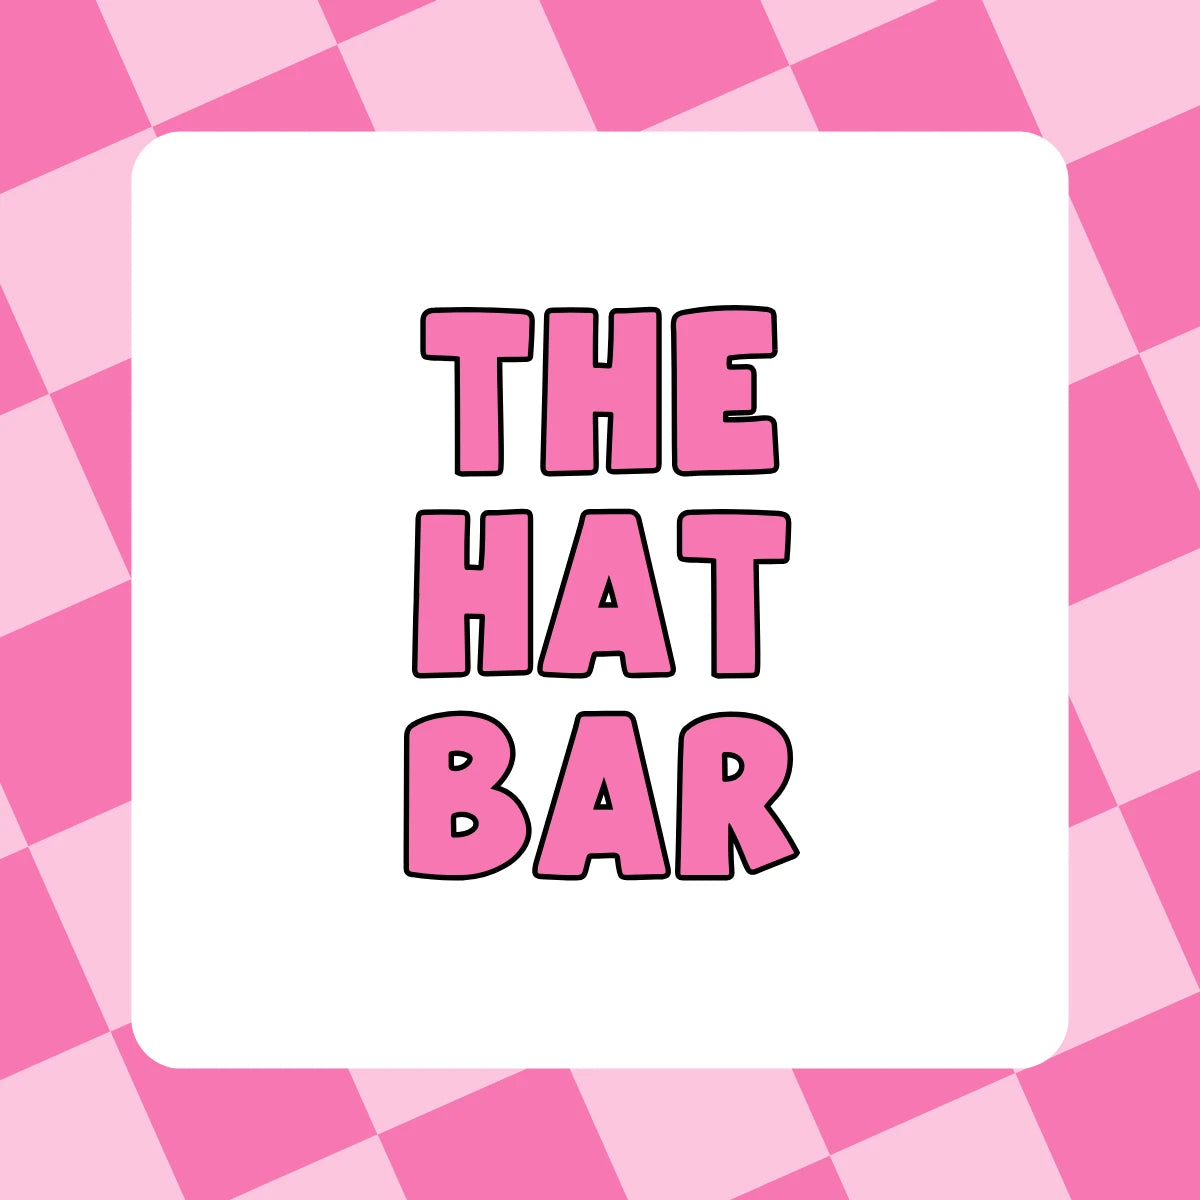 Hat Bar